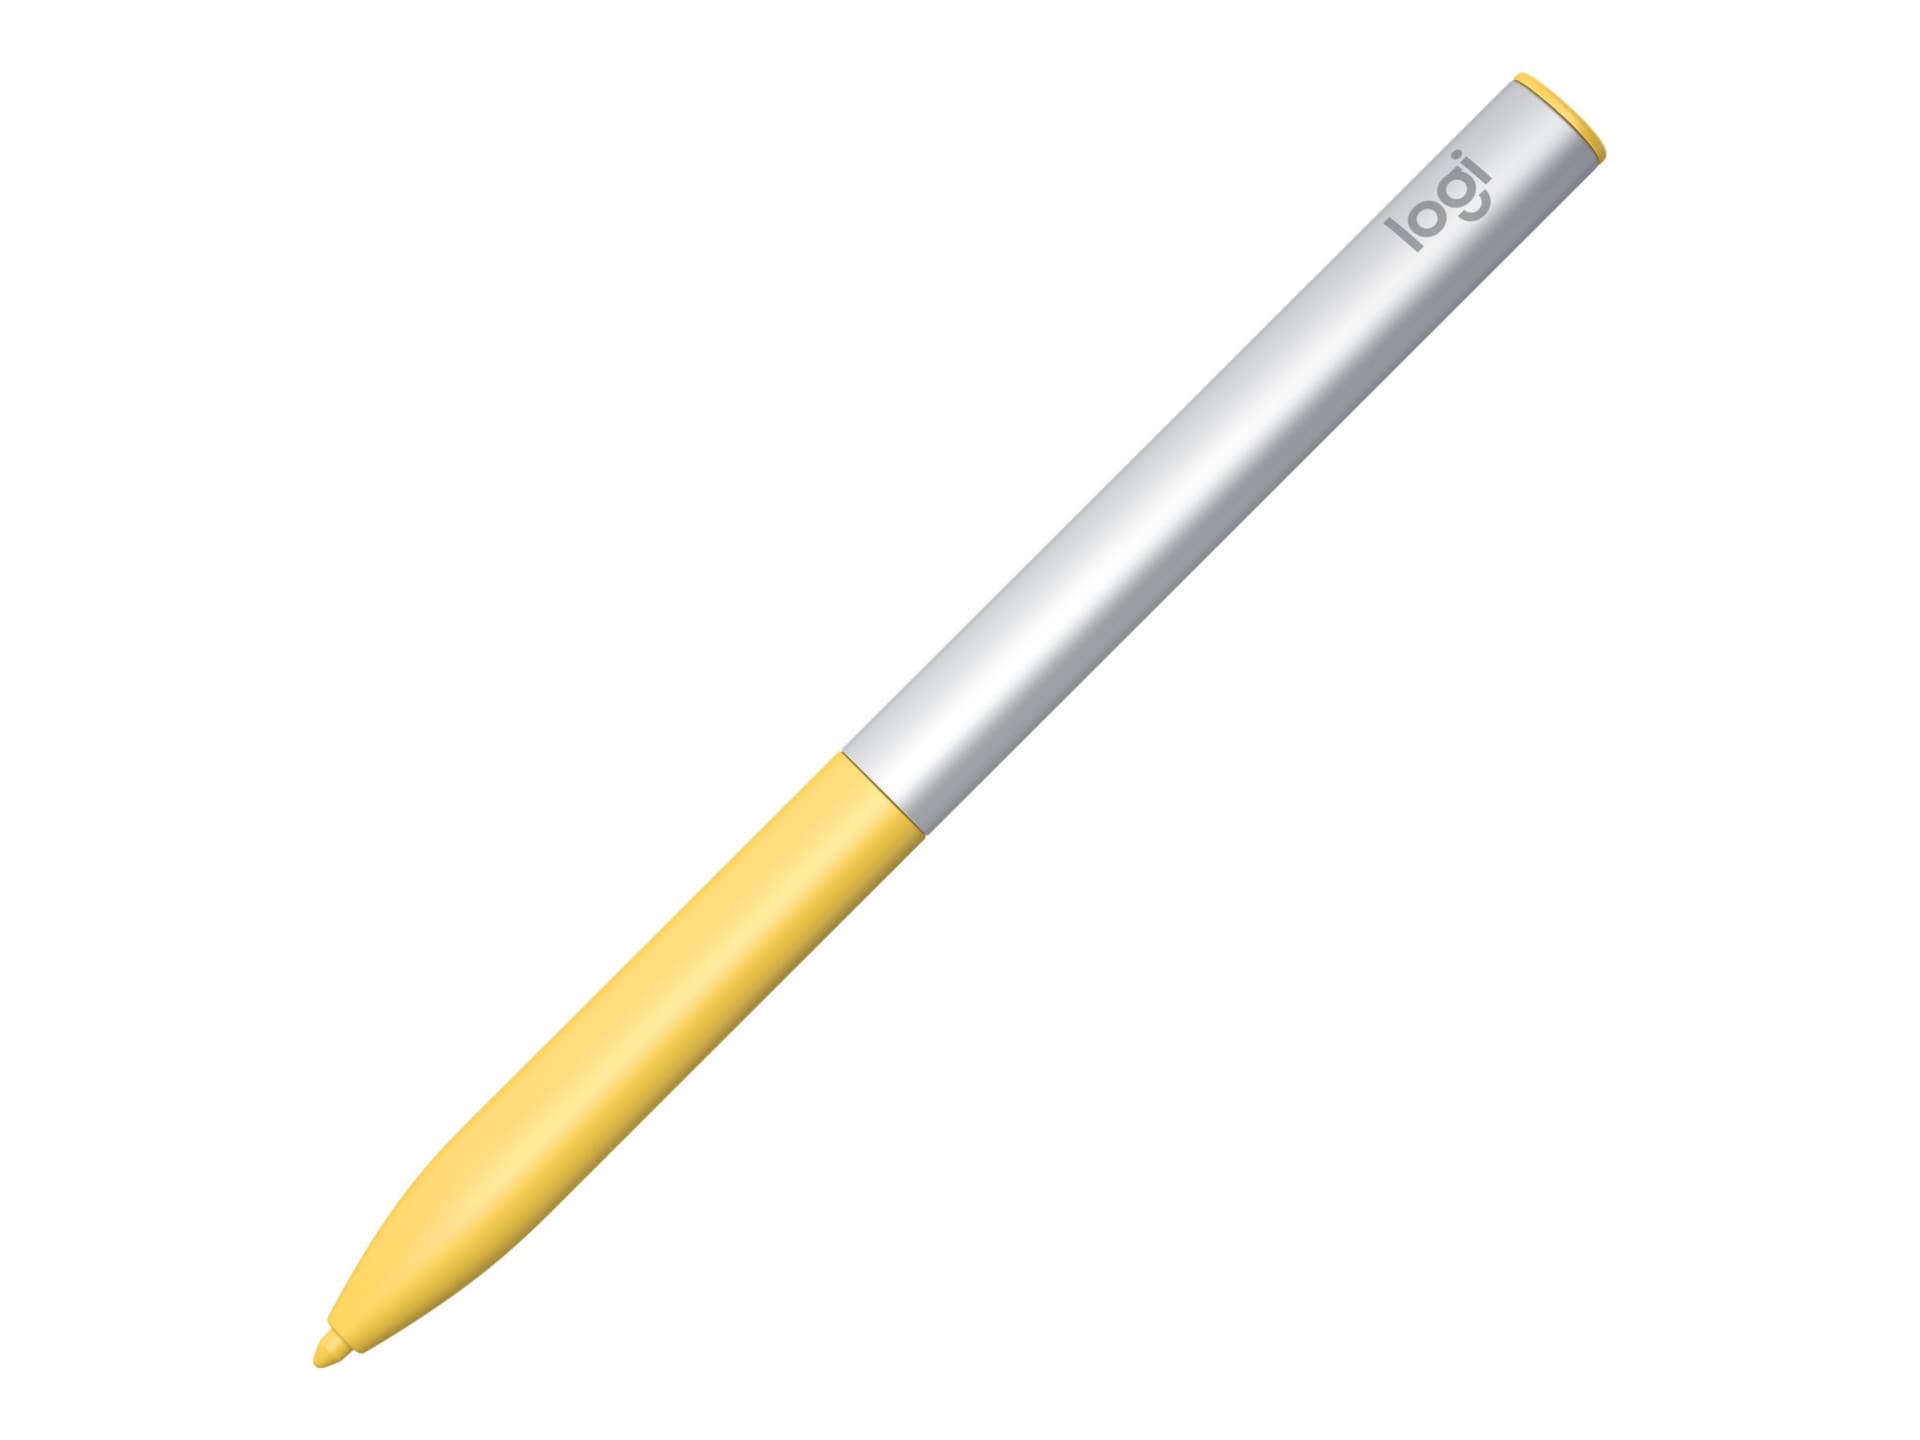 Logitech Pen Rechargeable USI Stylus Designed for Learning - digital pen -